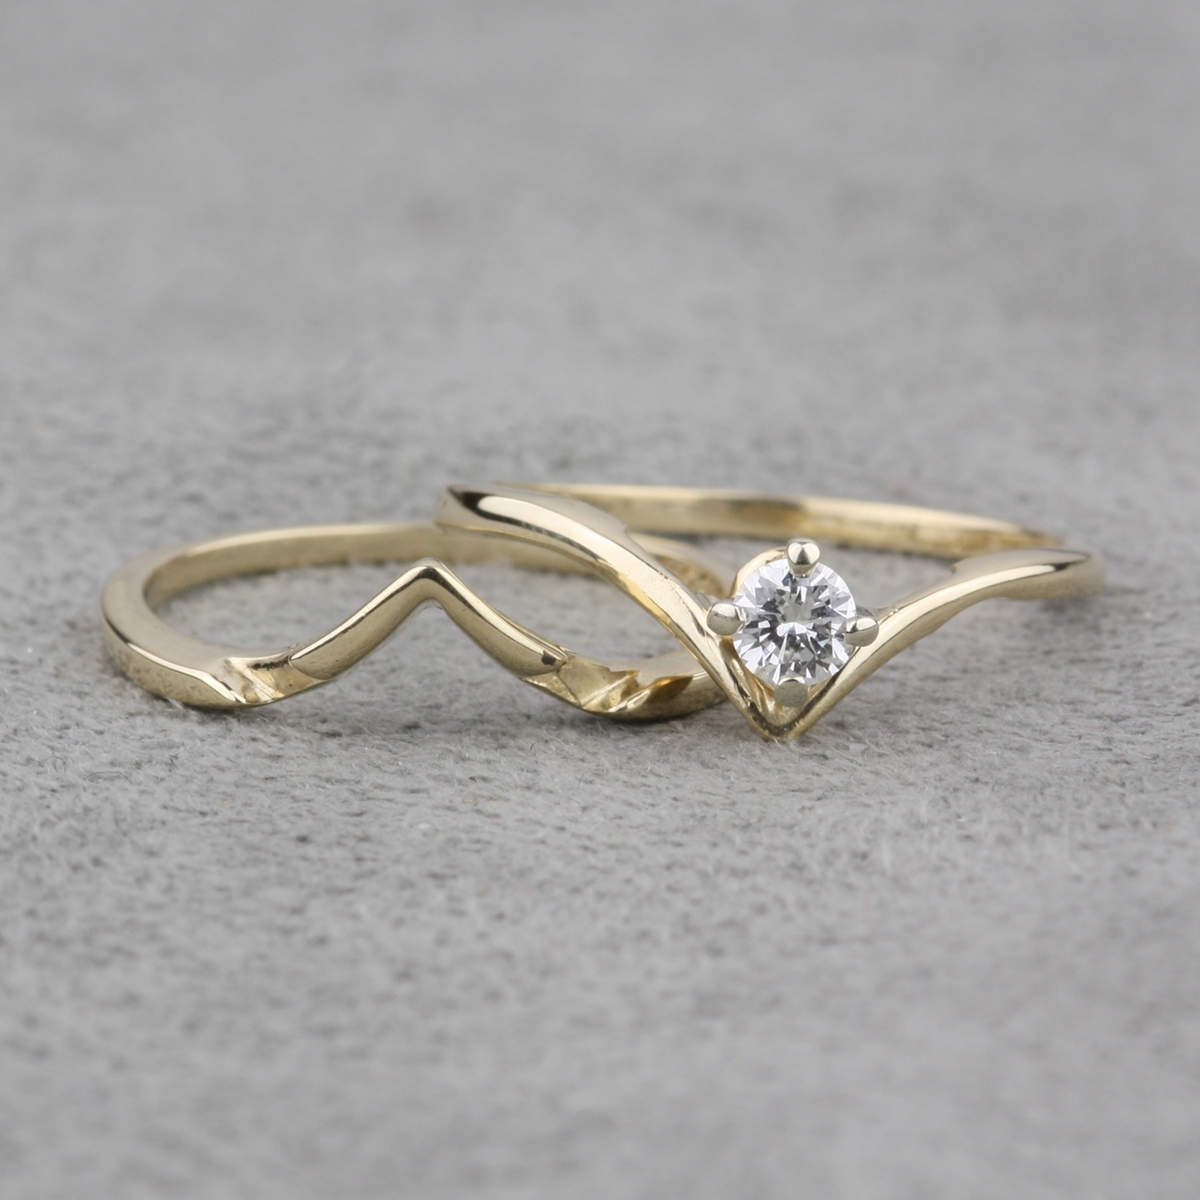 Sell Engagement Rings Used Diamond Rings